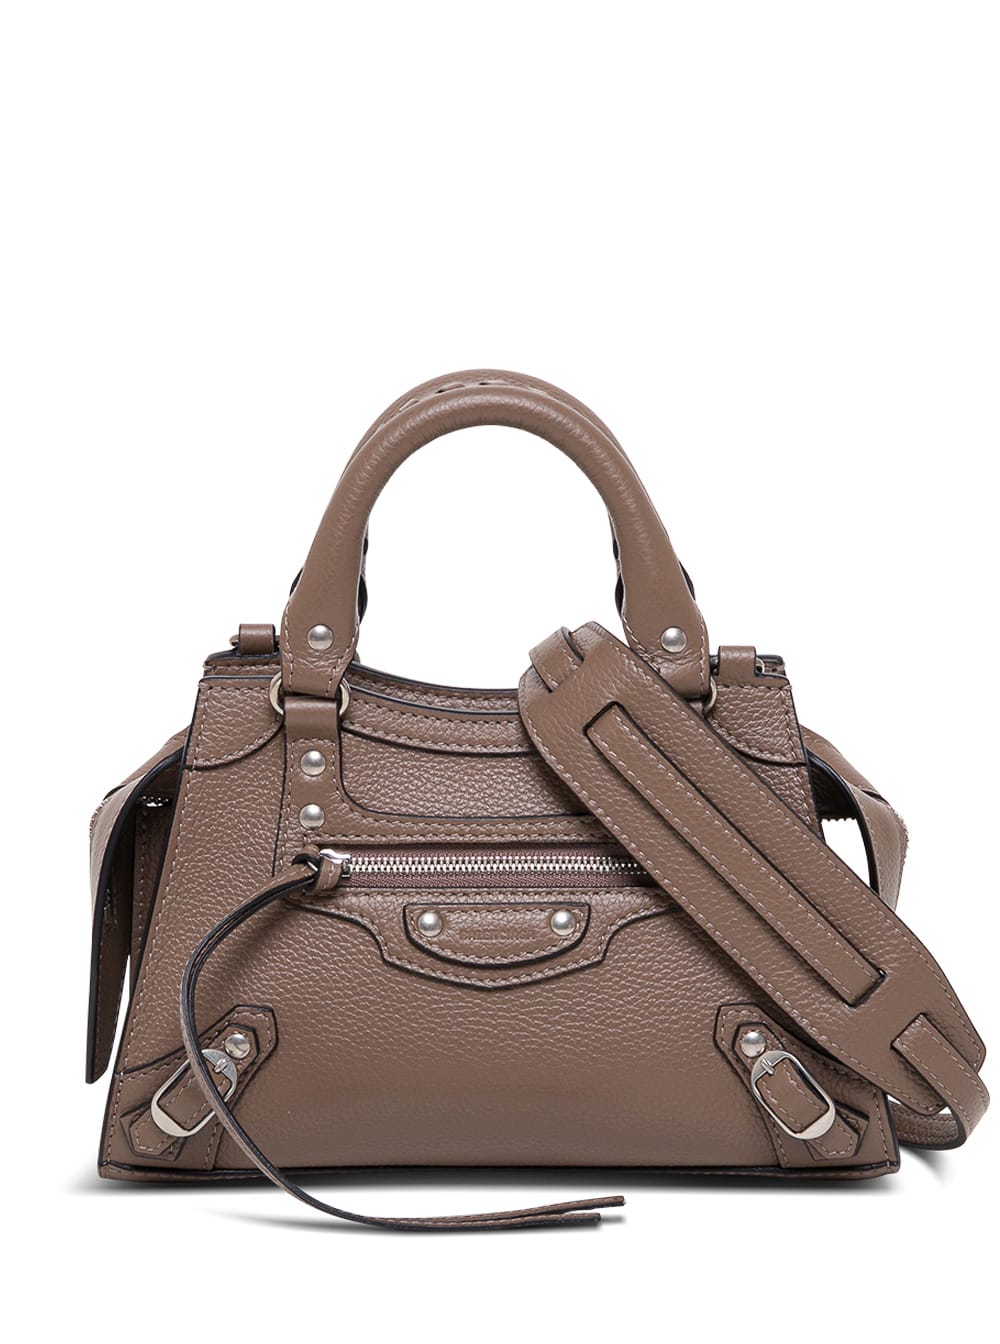 Balenciaga Neo Classic City Handbag In Taupe Colored Leather